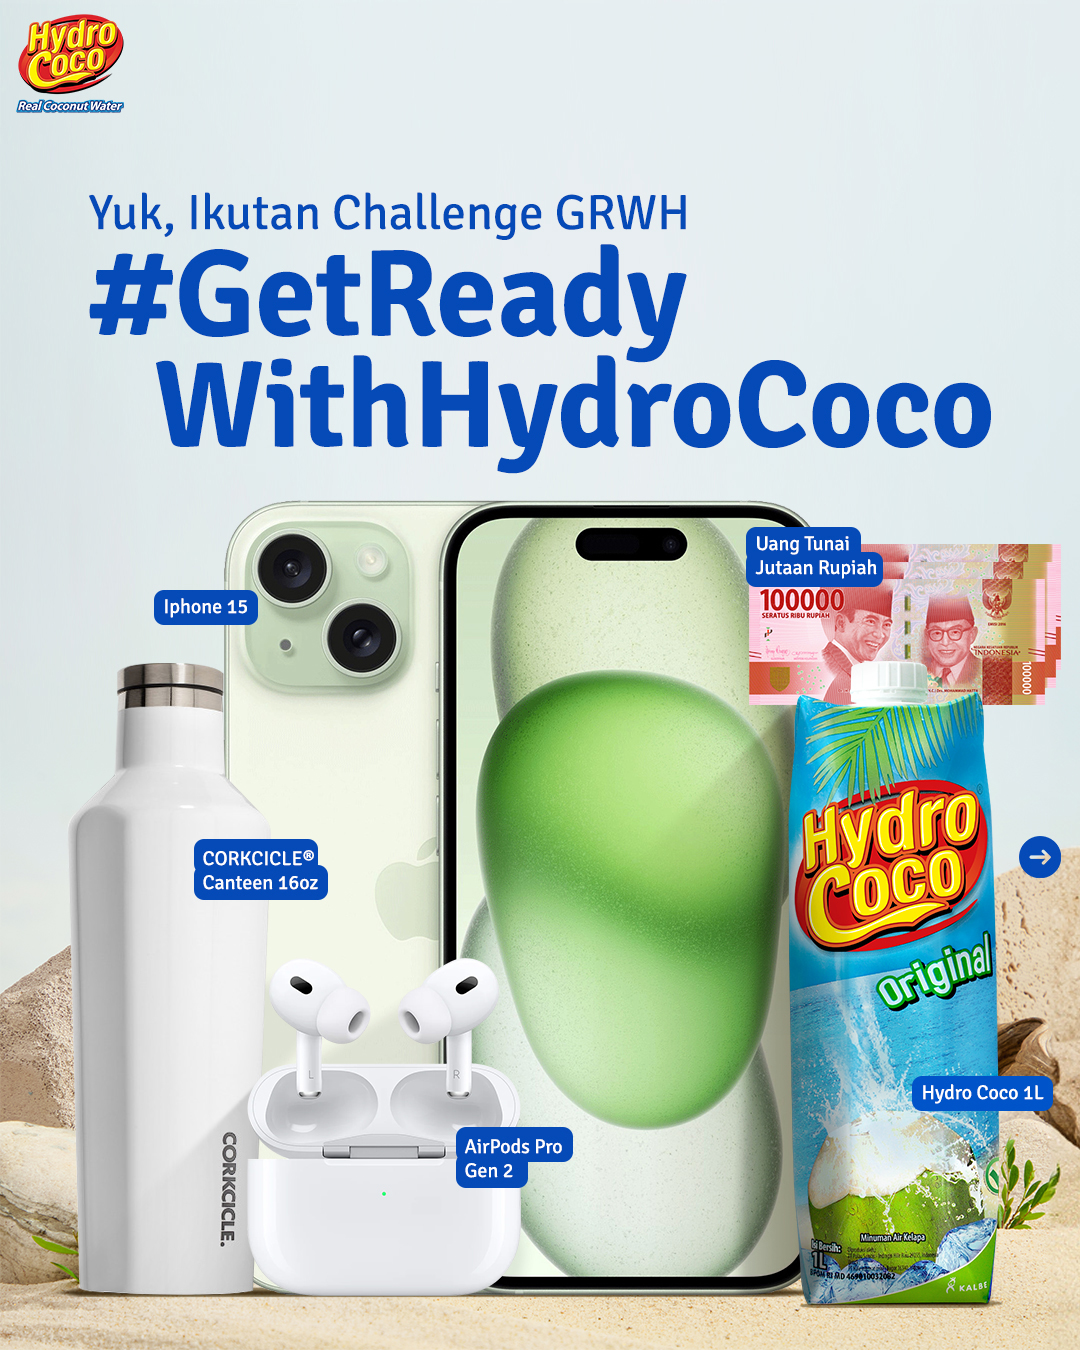 Hydro Coco ArtikelSyarat & ketentuan challenge GRWH (Get Ready With Hydro Coco)